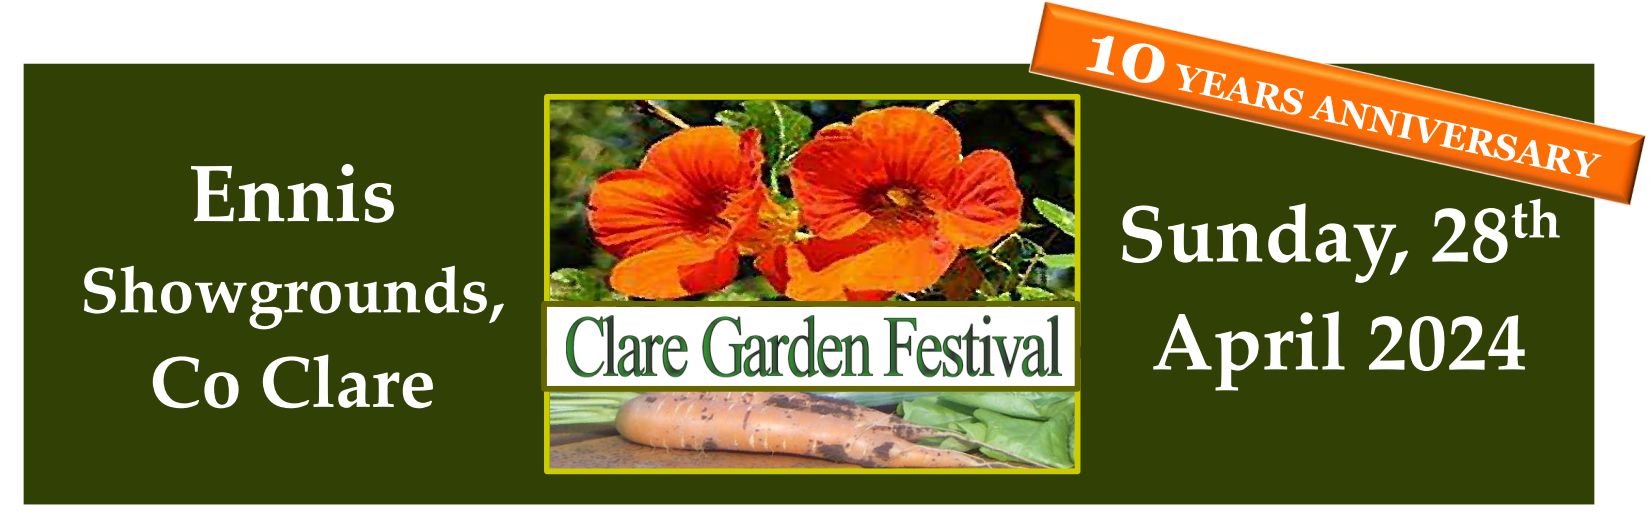 Clare Garden Festival 2024 - 10 years - 28th April